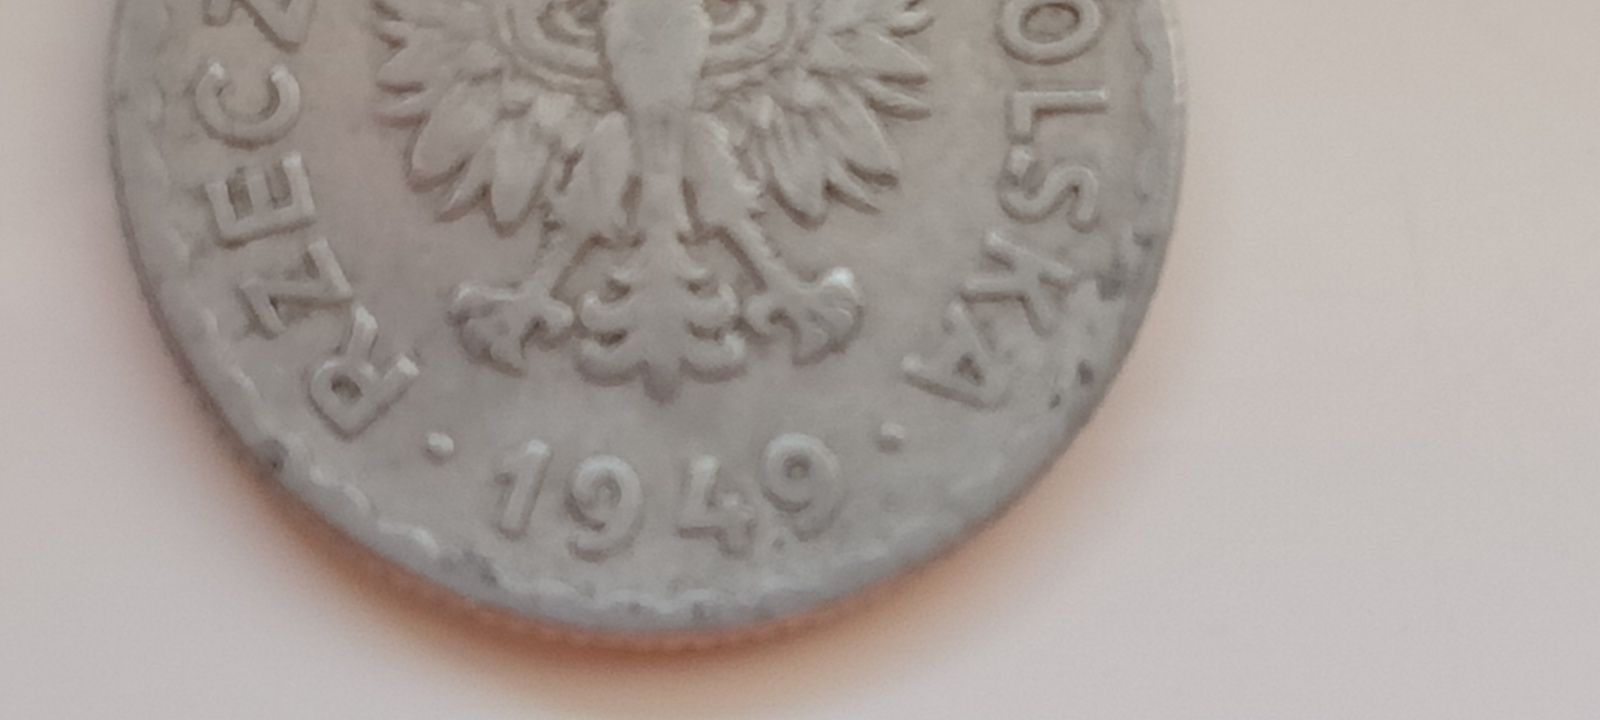 Moneta 1 zł z 1949r Okazja